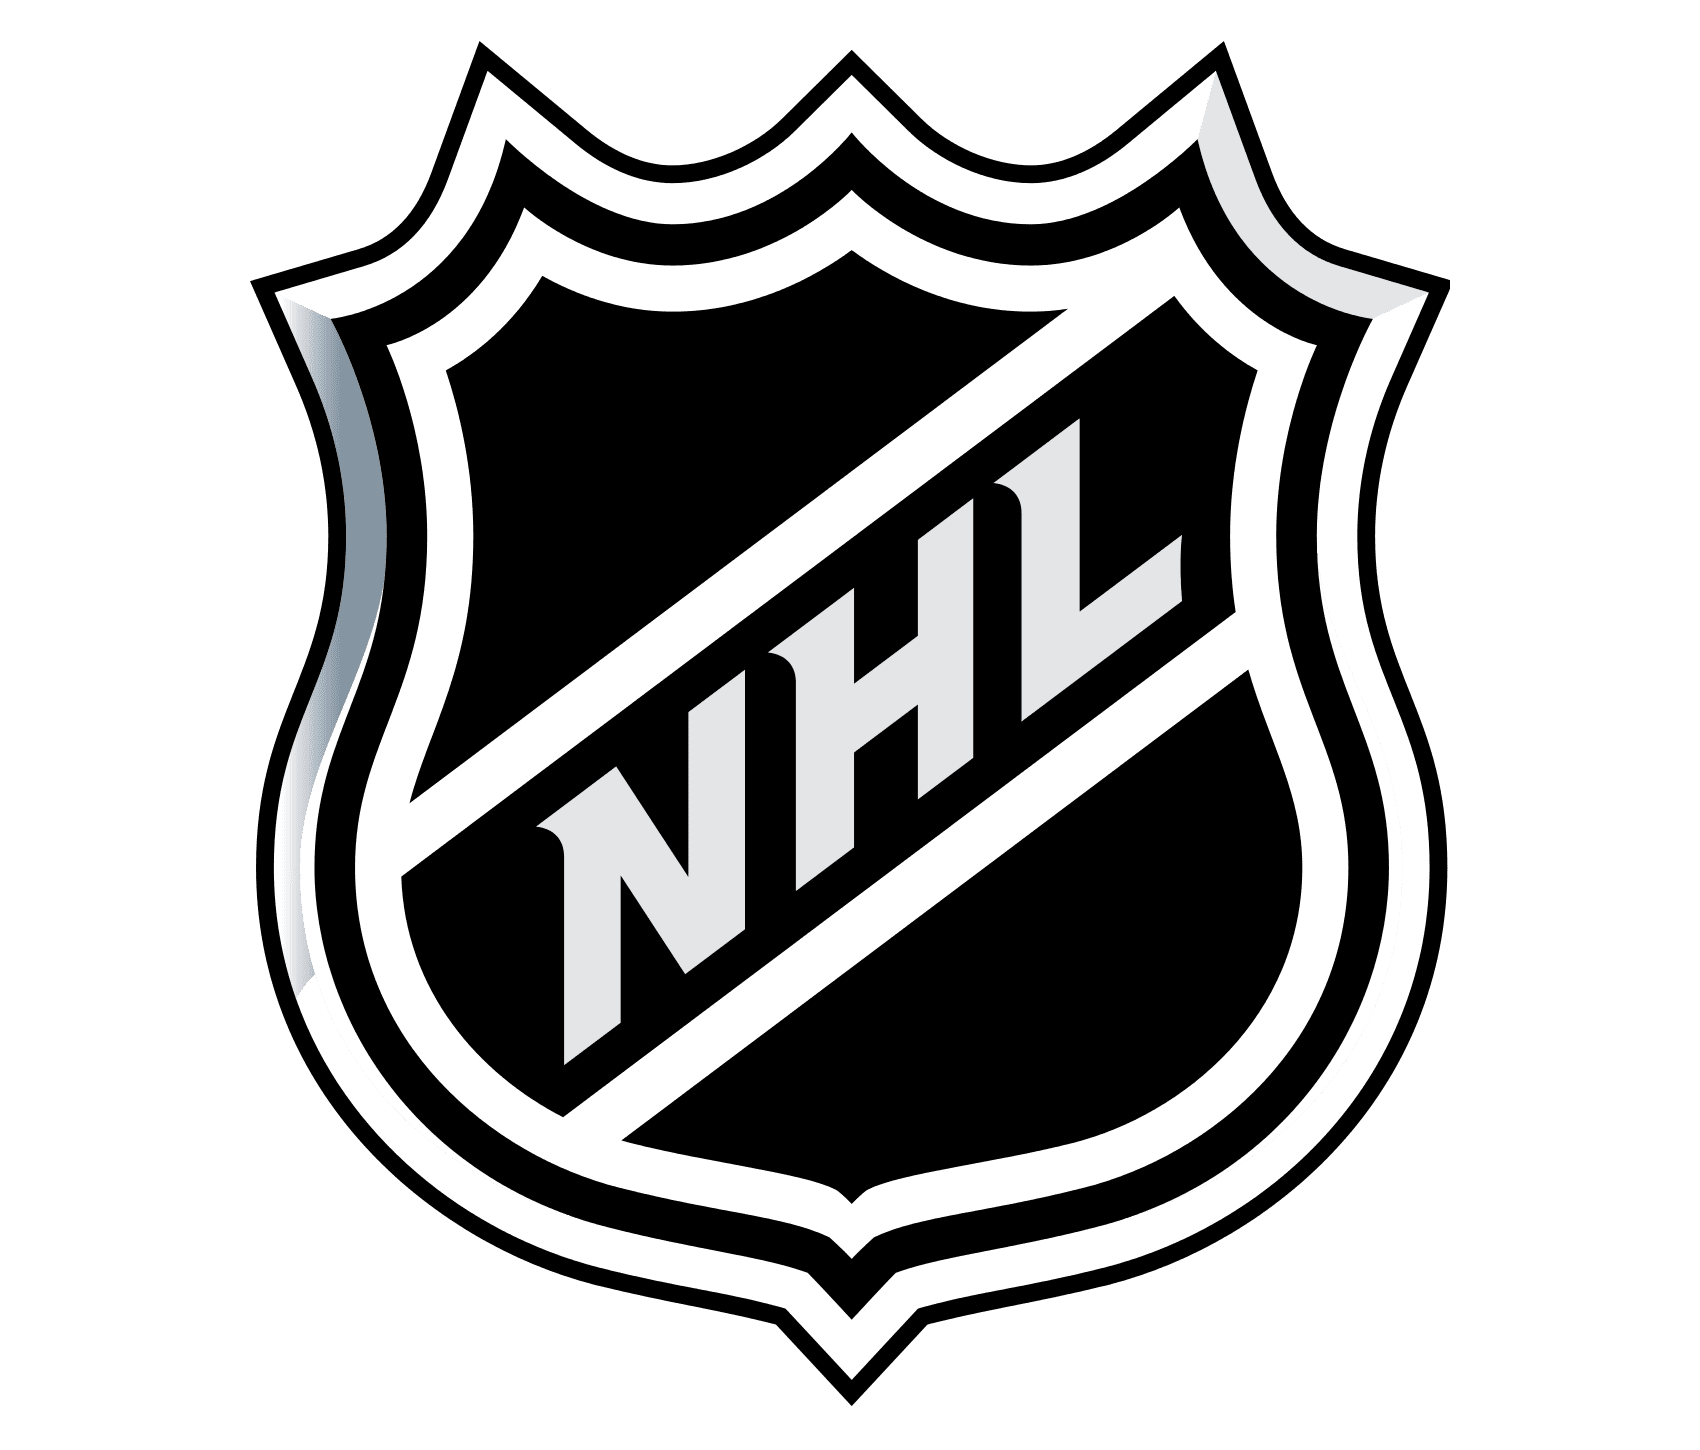 toronto maple leafs - The Hockey News